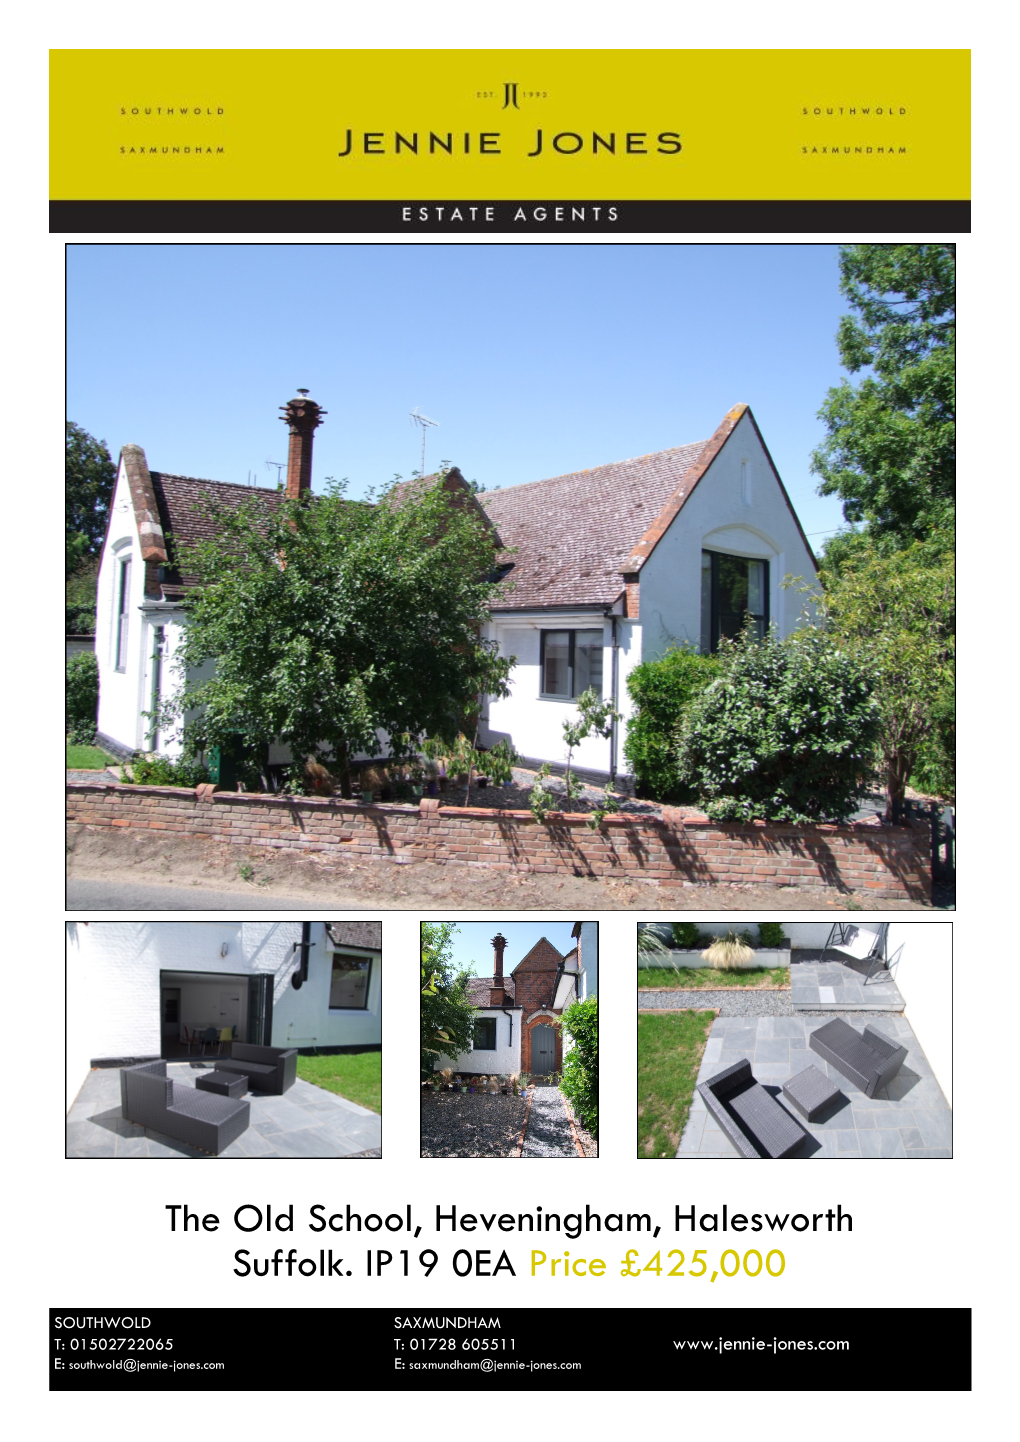 The Old School, Heveningham, Halesworth Suffolk. IP19 0EA Price £425,000